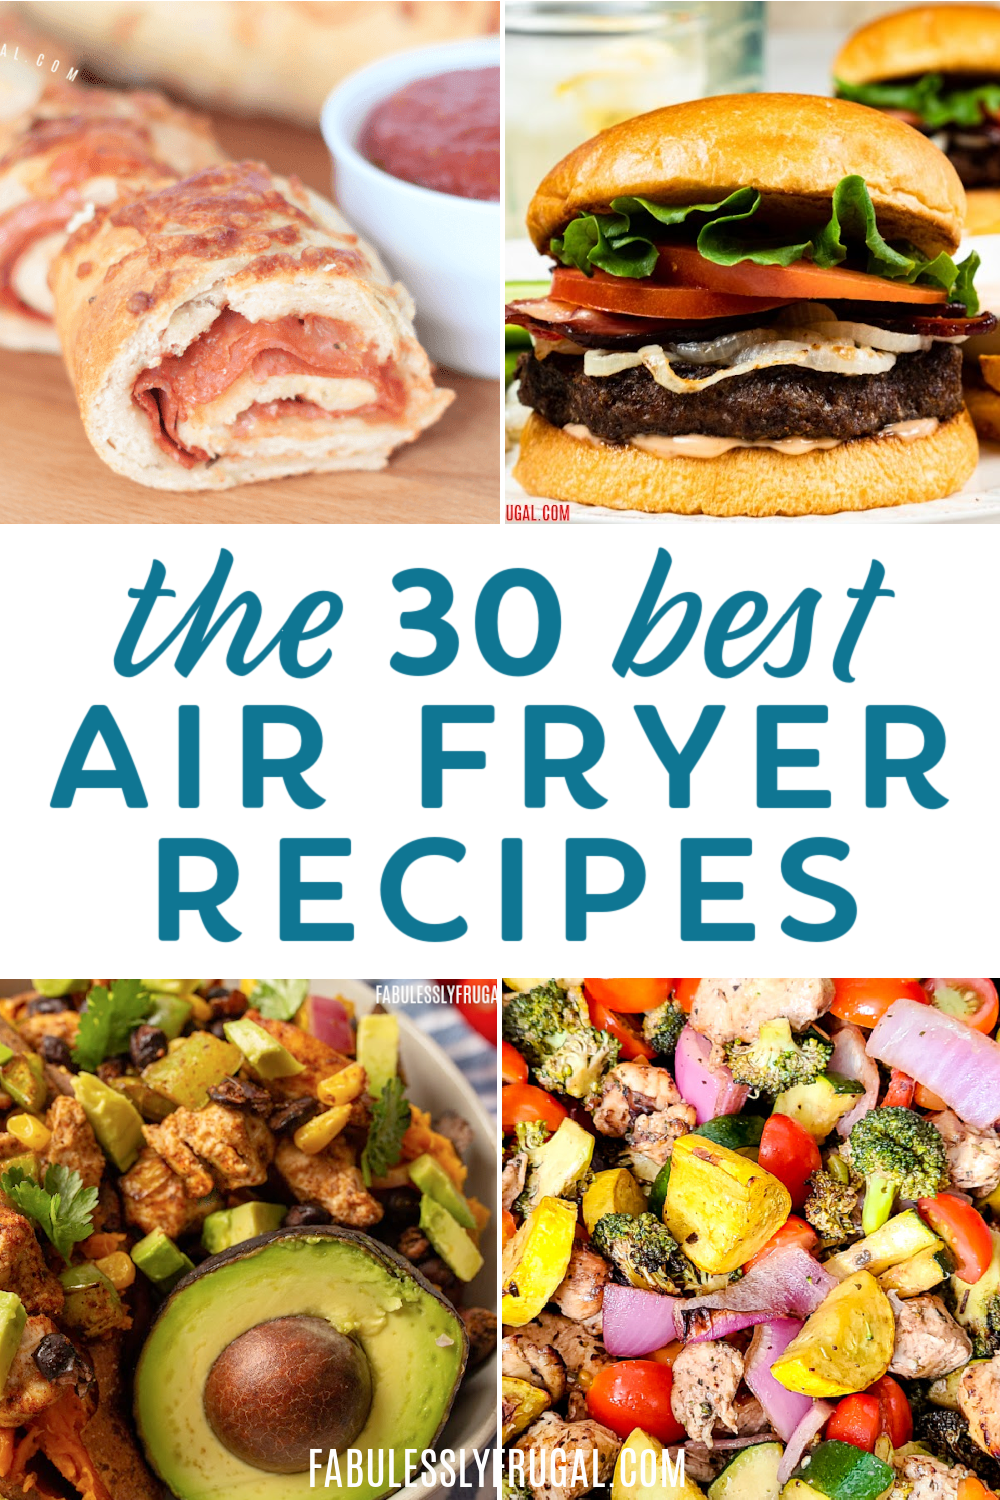 Air fryer recipes for kids - Air Fryer Yum